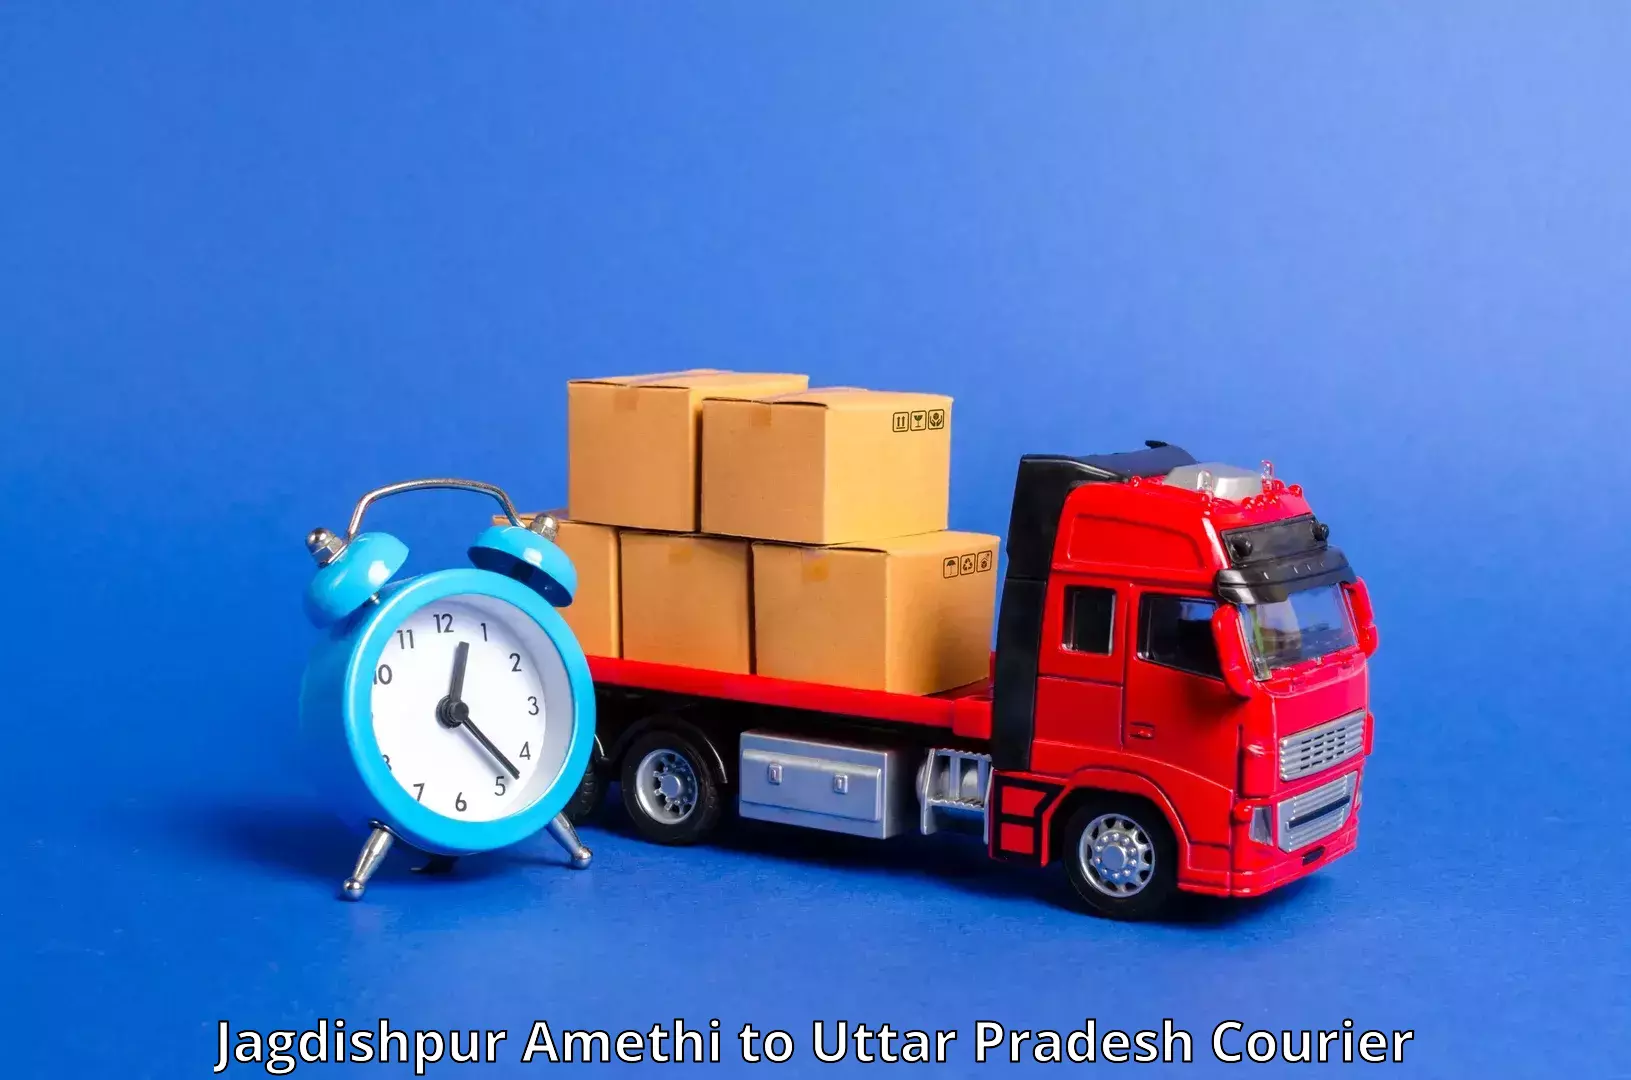 Budget-friendly shipping in Jagdishpur Amethi to Ayodhya